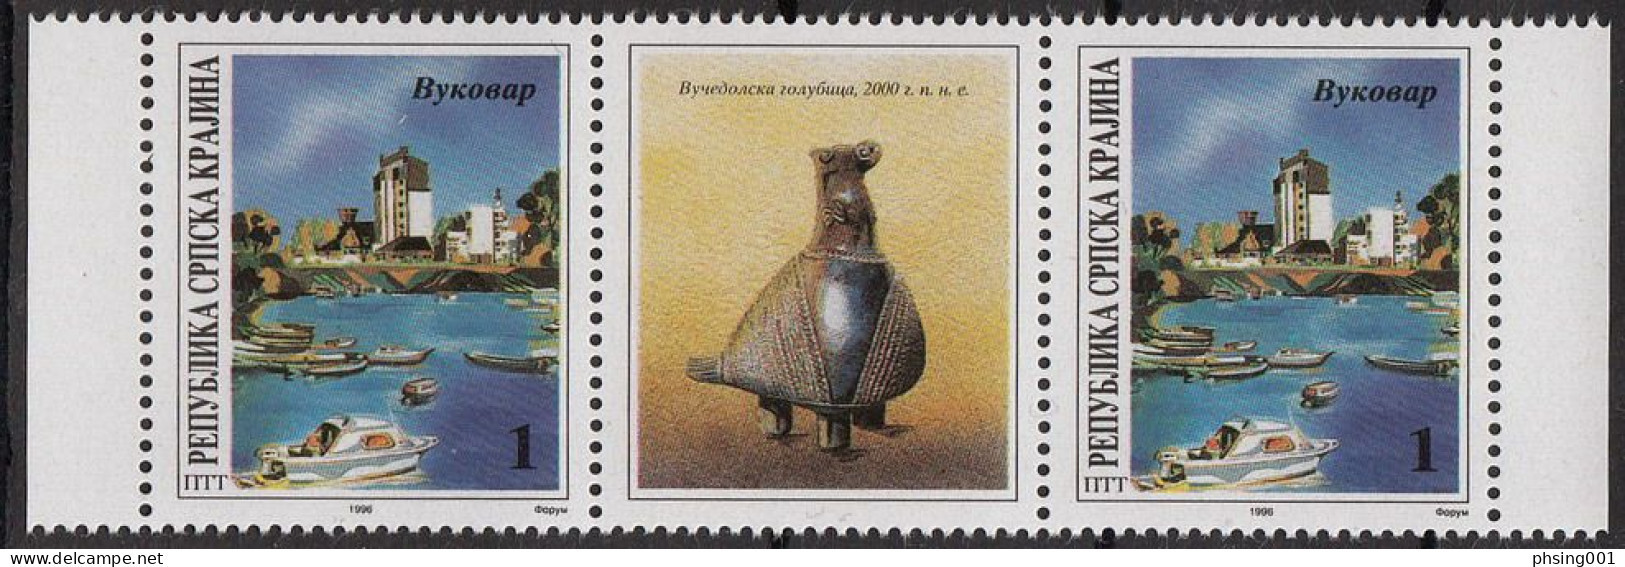 Croatia 1996 Serbian Krajina River Danube Boats, Middle Row, 2 Stamps With Label MNH - Croatia